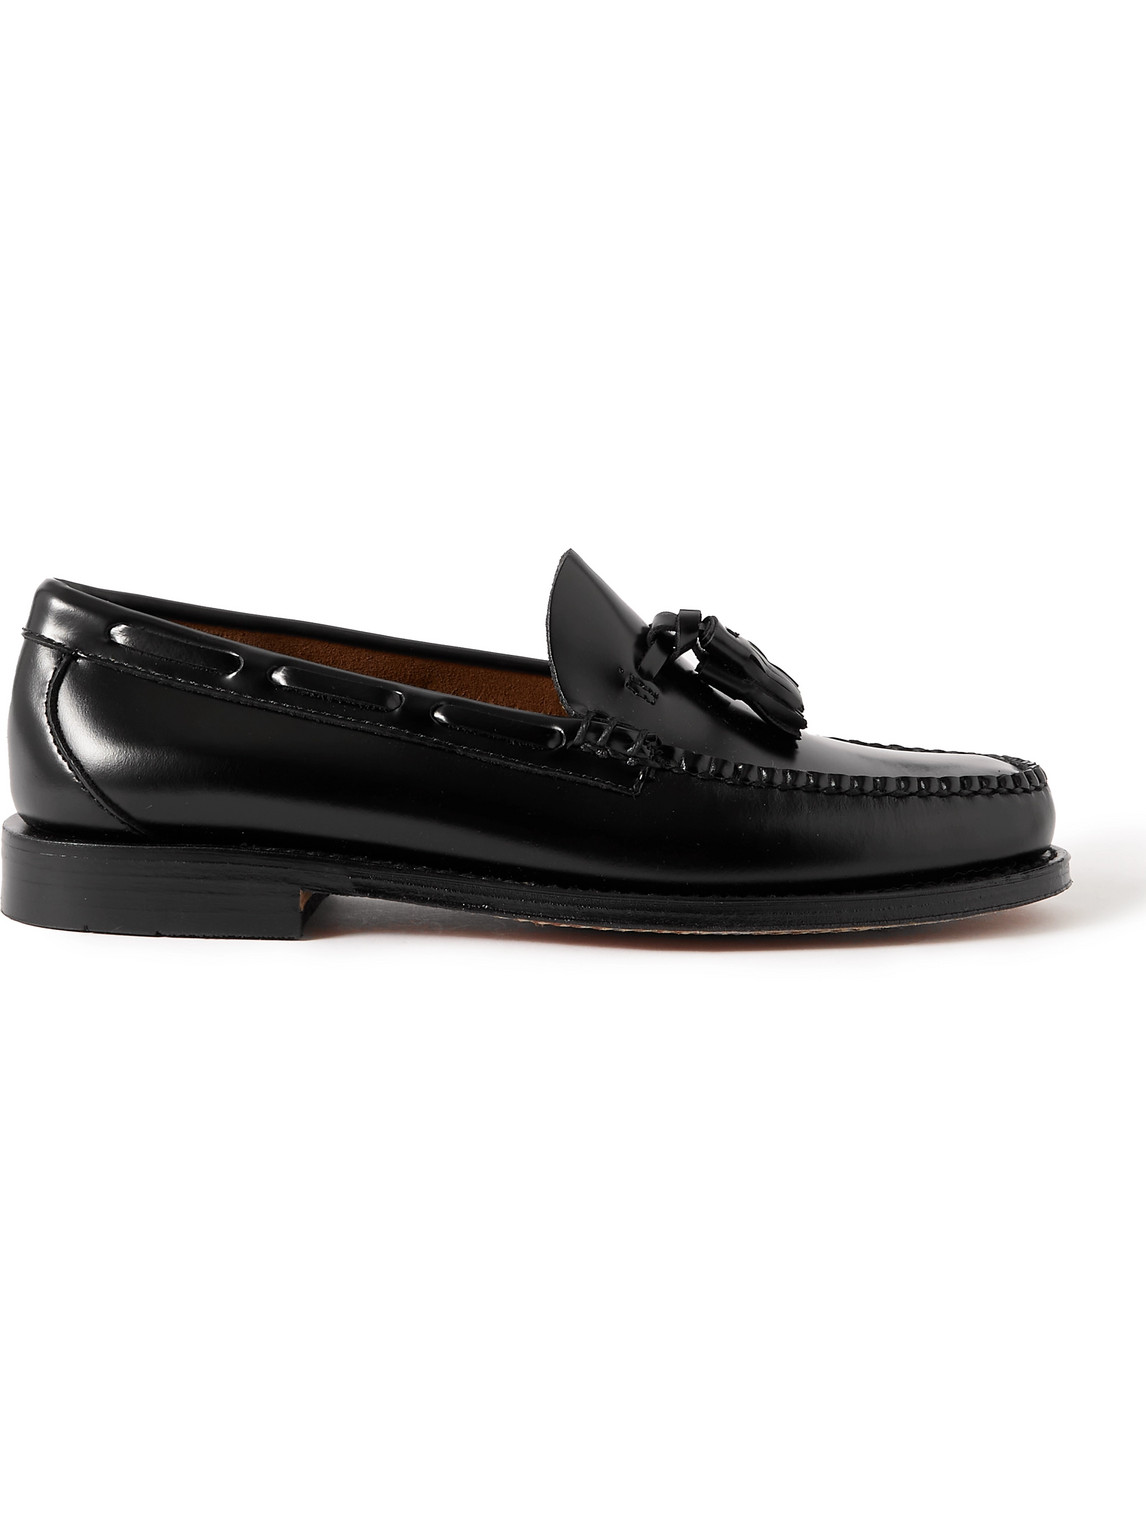 G.H. Bass & Co. - Weejuns Heritage Larkin Glossed-Leather Tasselled Loafers - Men - Black - UK 9 von G.H. Bass & Co.